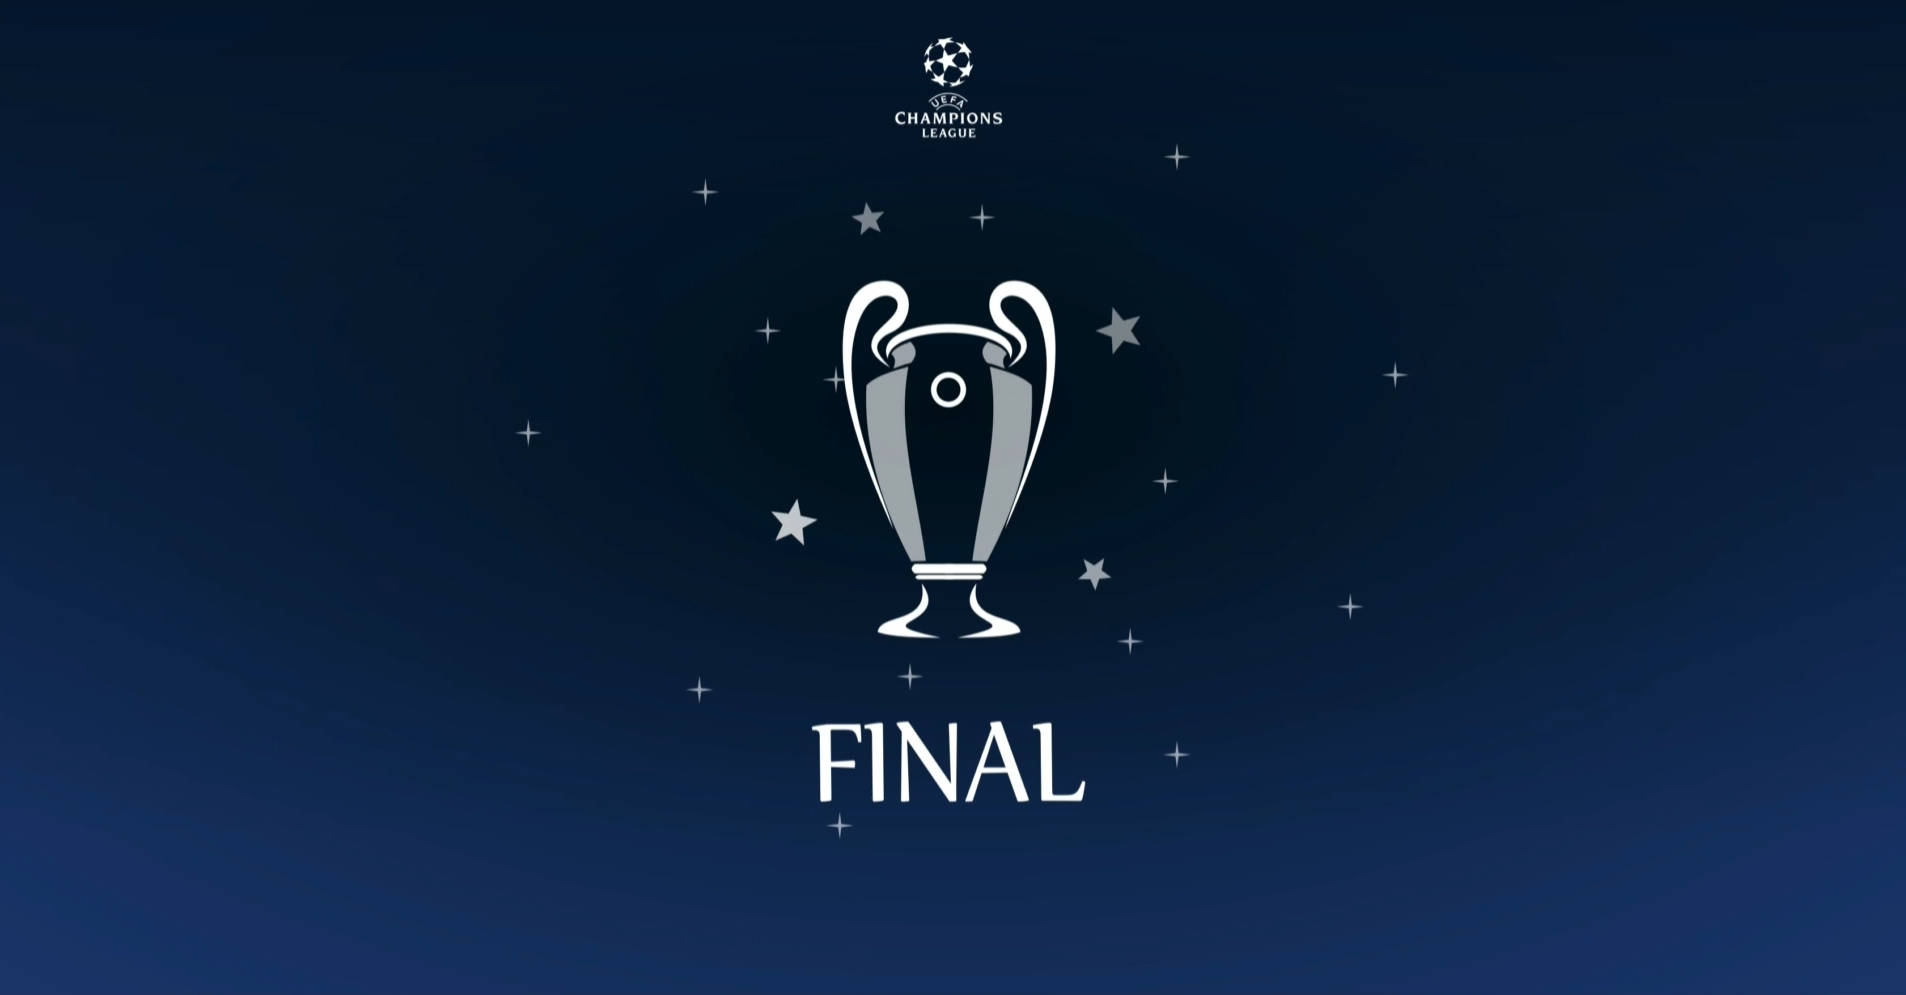 UEFA Champions League Final Trophy Minimalist Wallpaper